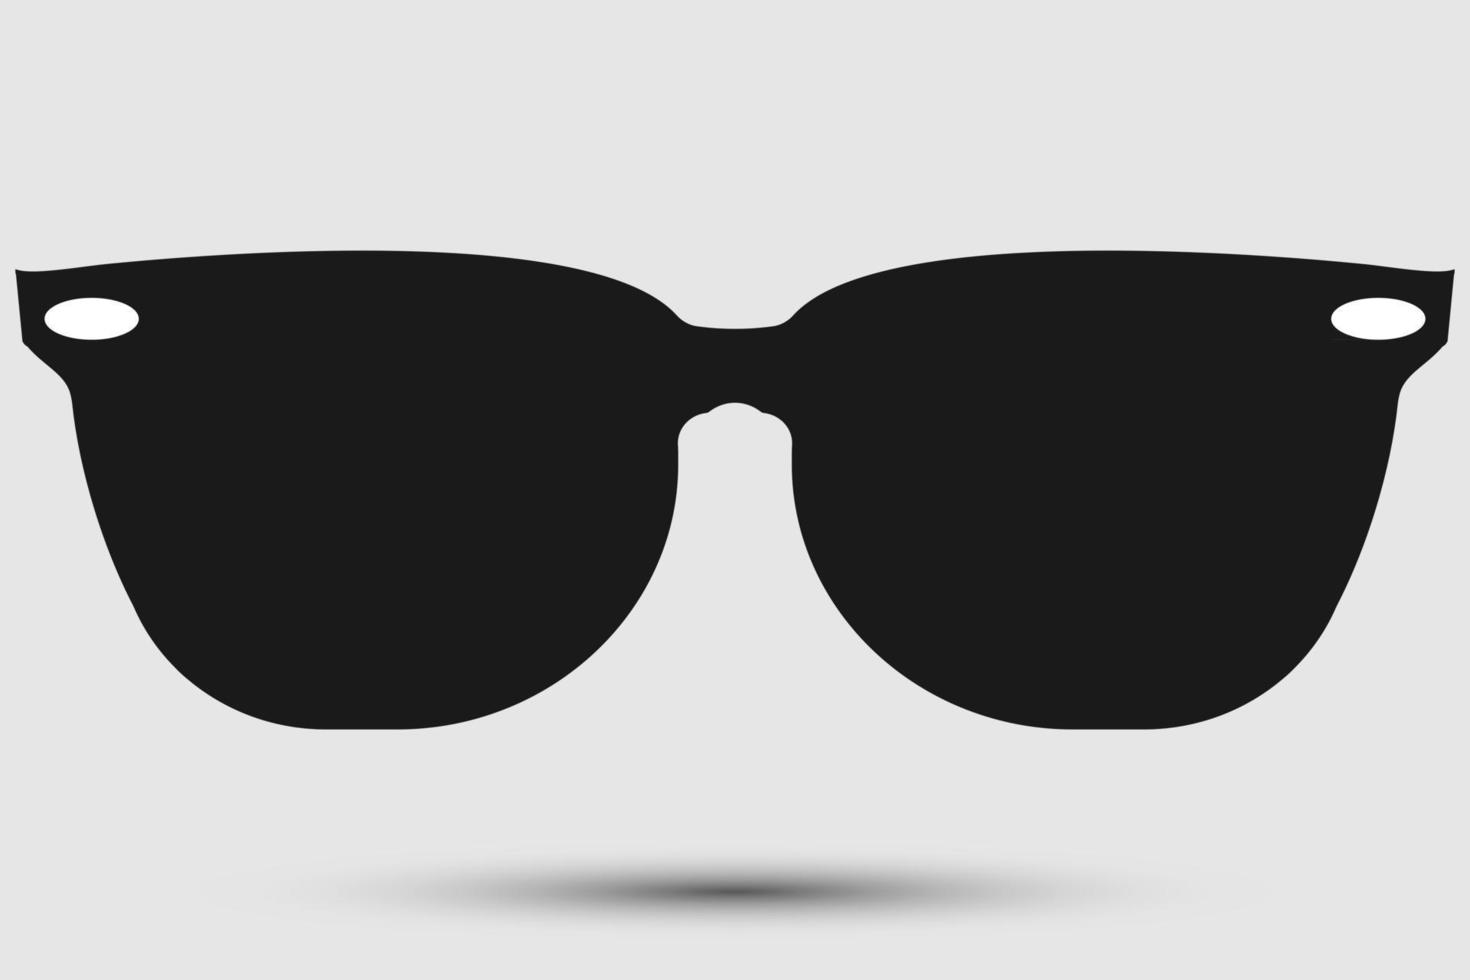 zonnebril zwart pictogram vector